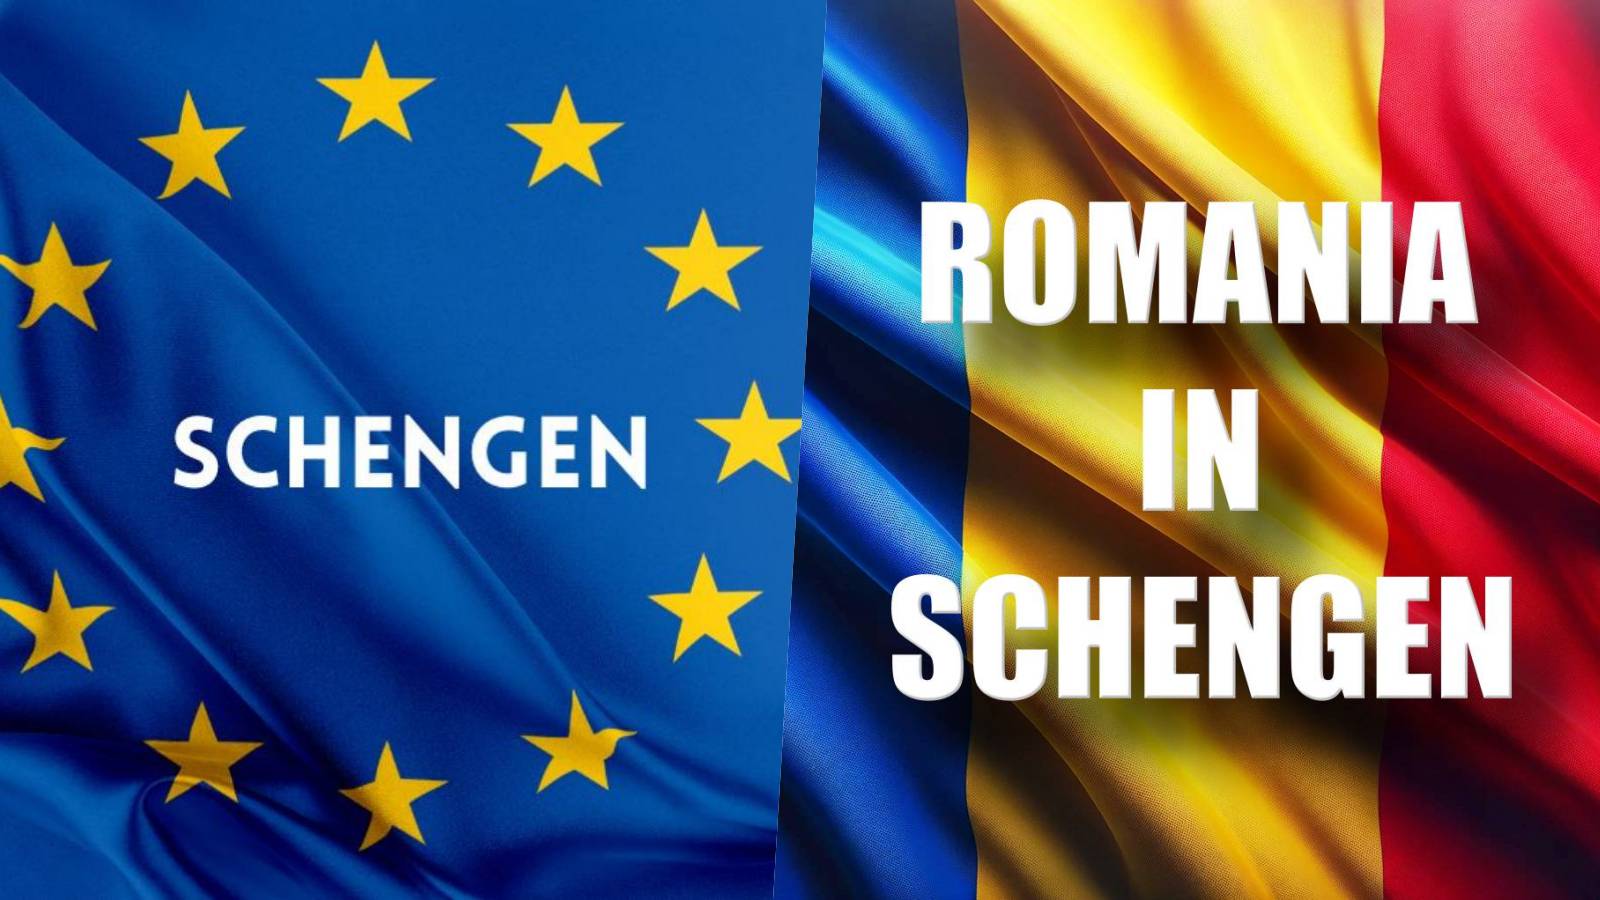 Schengen Planul Oficial Radical ULTIM MOMENT Secret Finalizarea Aderarii Romaniei Schengen Afectata